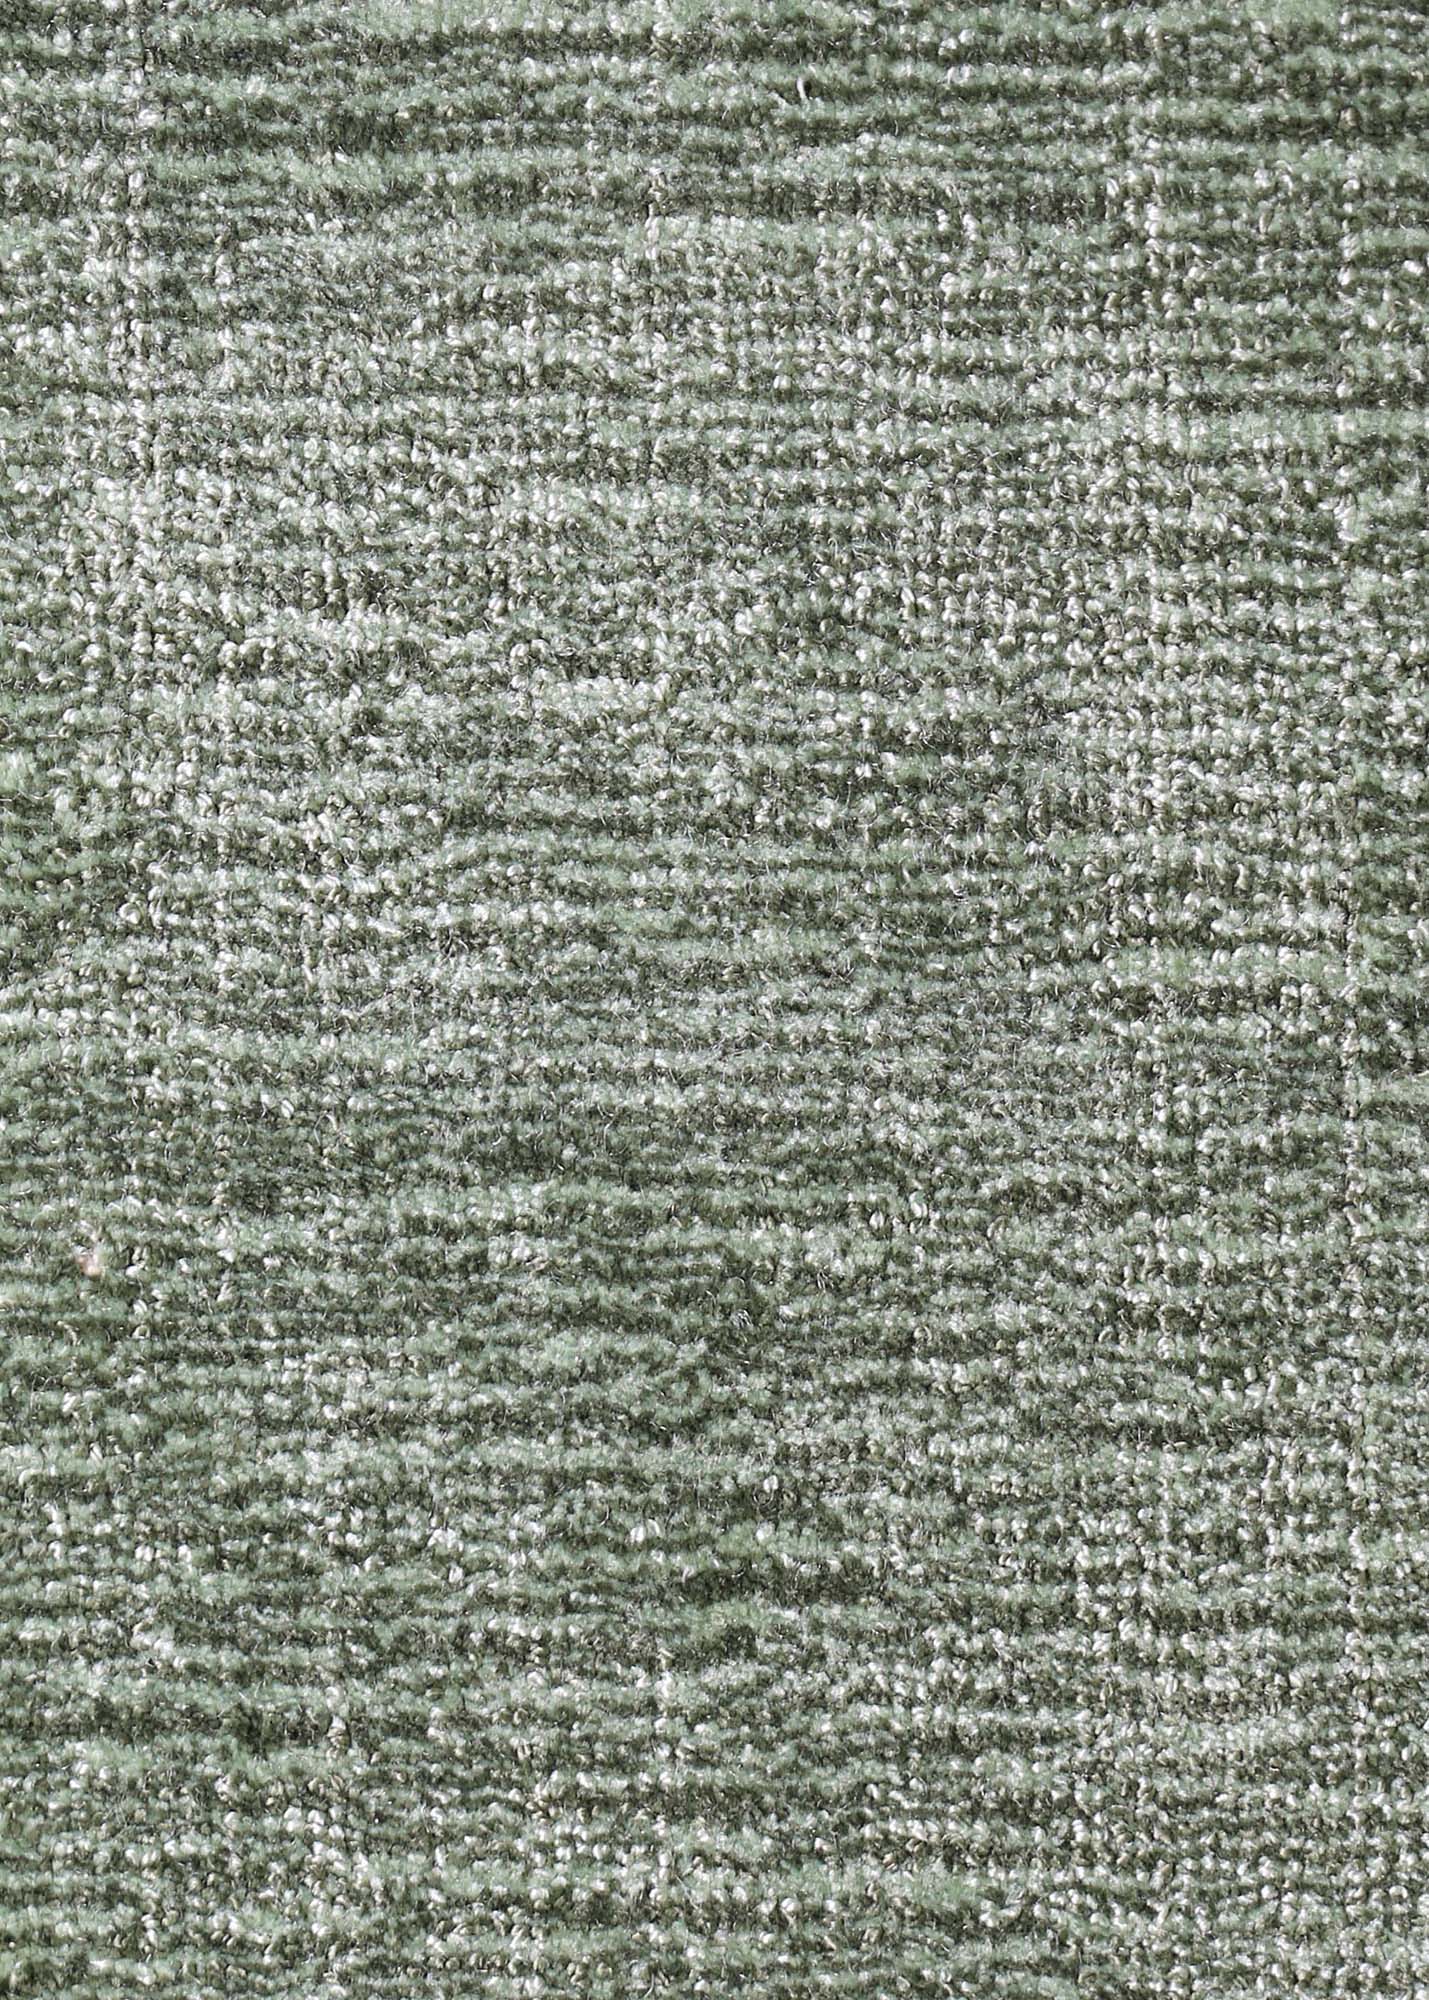 Comprar alfombra KP a medida color verde modelo Recikla en Fernández Textil. Aspecto desgastado, fibra Econyl. sostenible